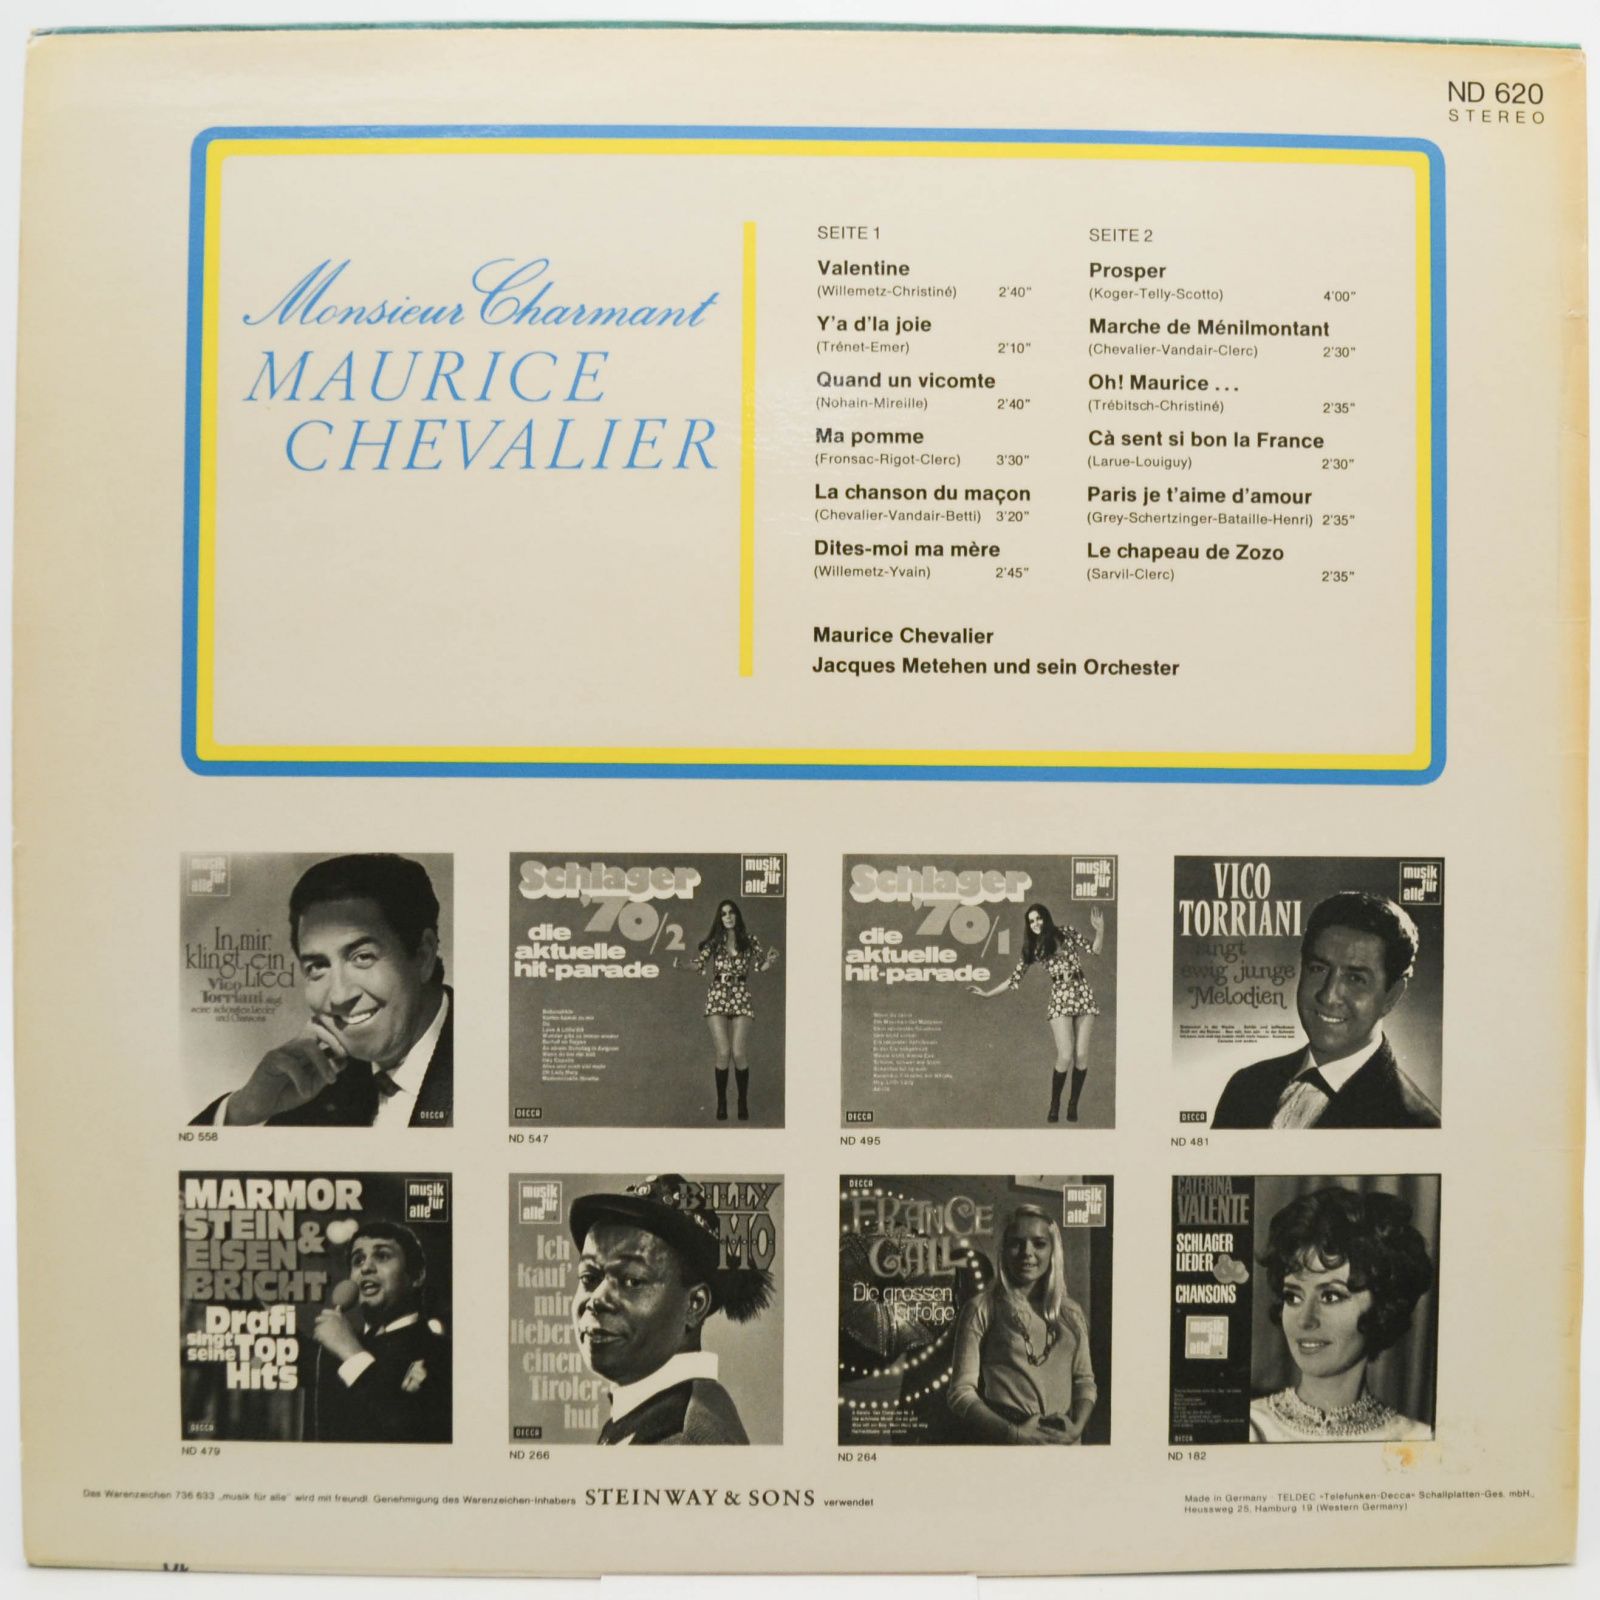 Maurice Chevalier — Monsieur Charmant, 1967